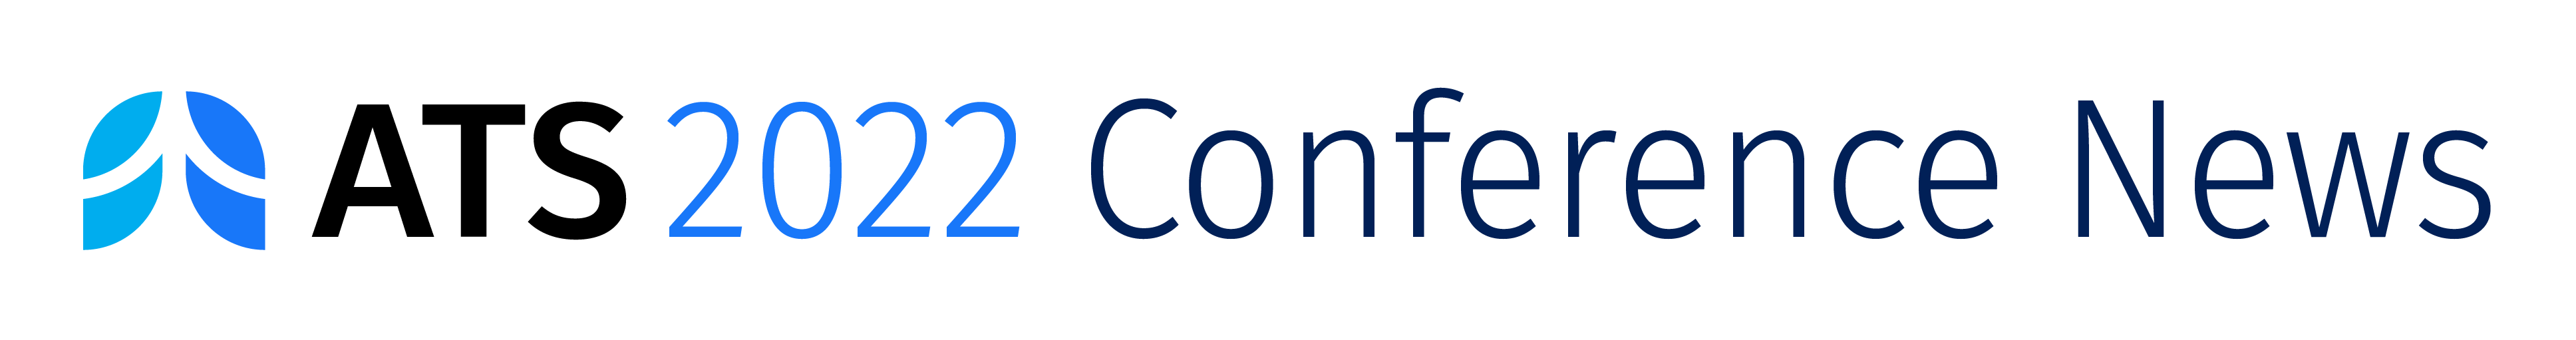 ATS conference logo